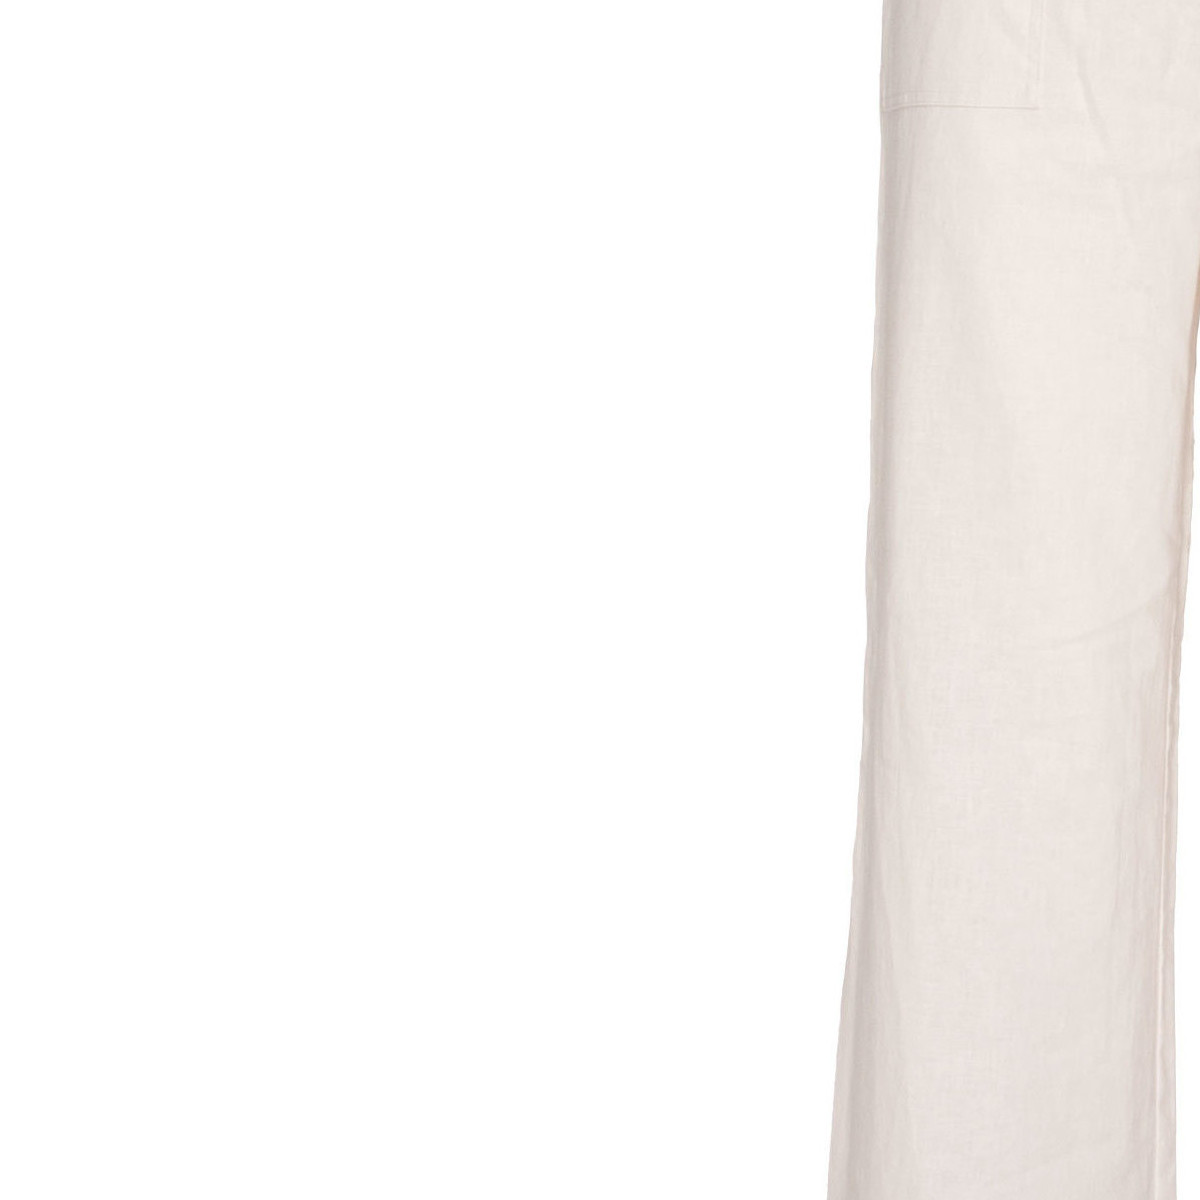 textil Mujer Pantalones Pepe jeans LOURDES-WHITE Blanco